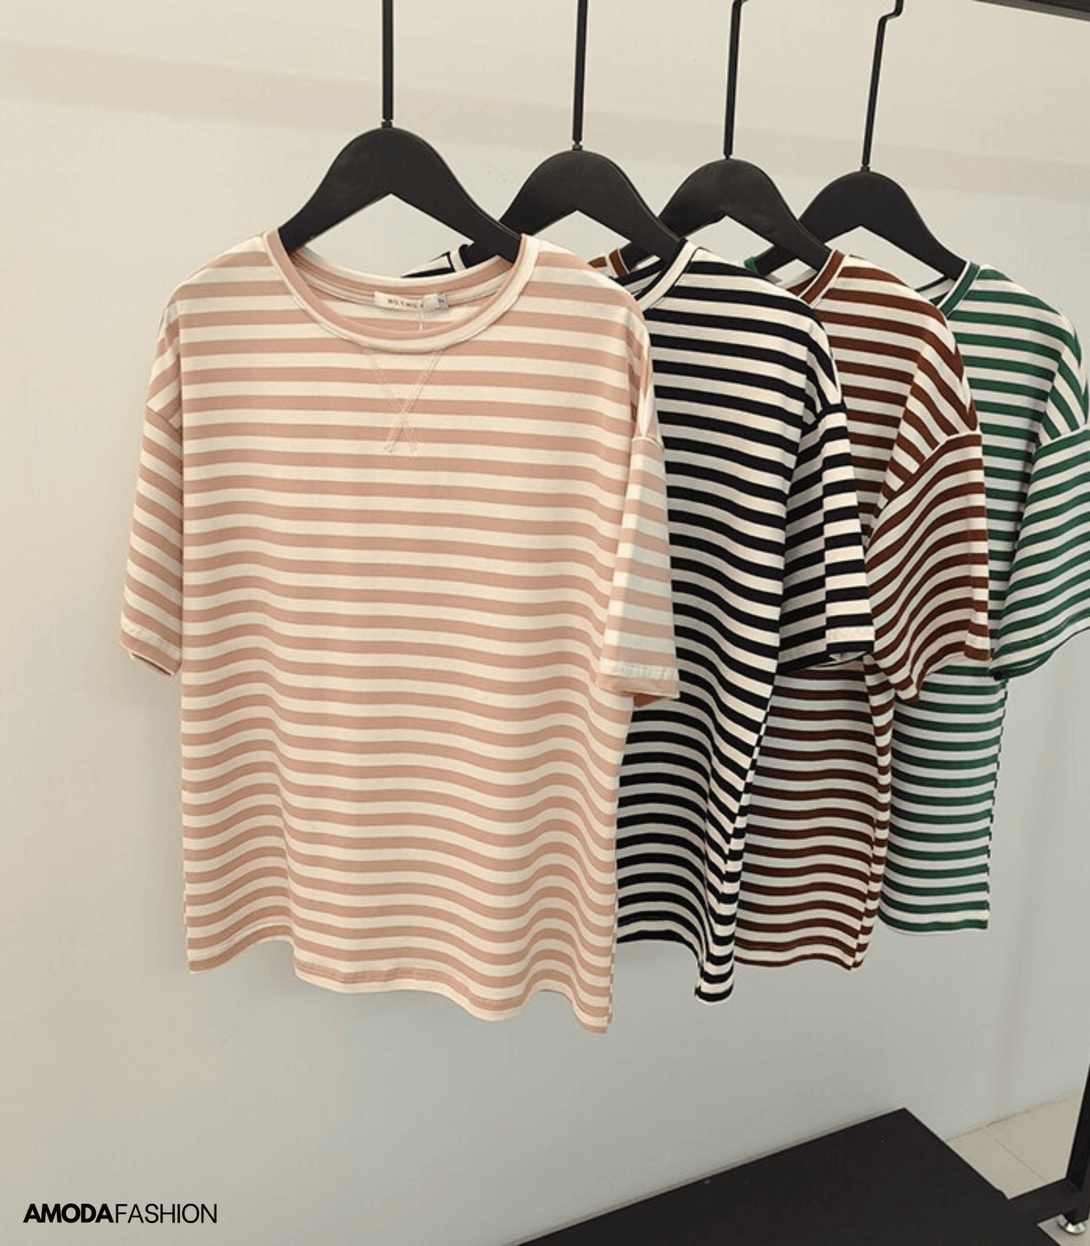 Farbig gestreiftes lockeres T-Shirt - Amodafashion.de